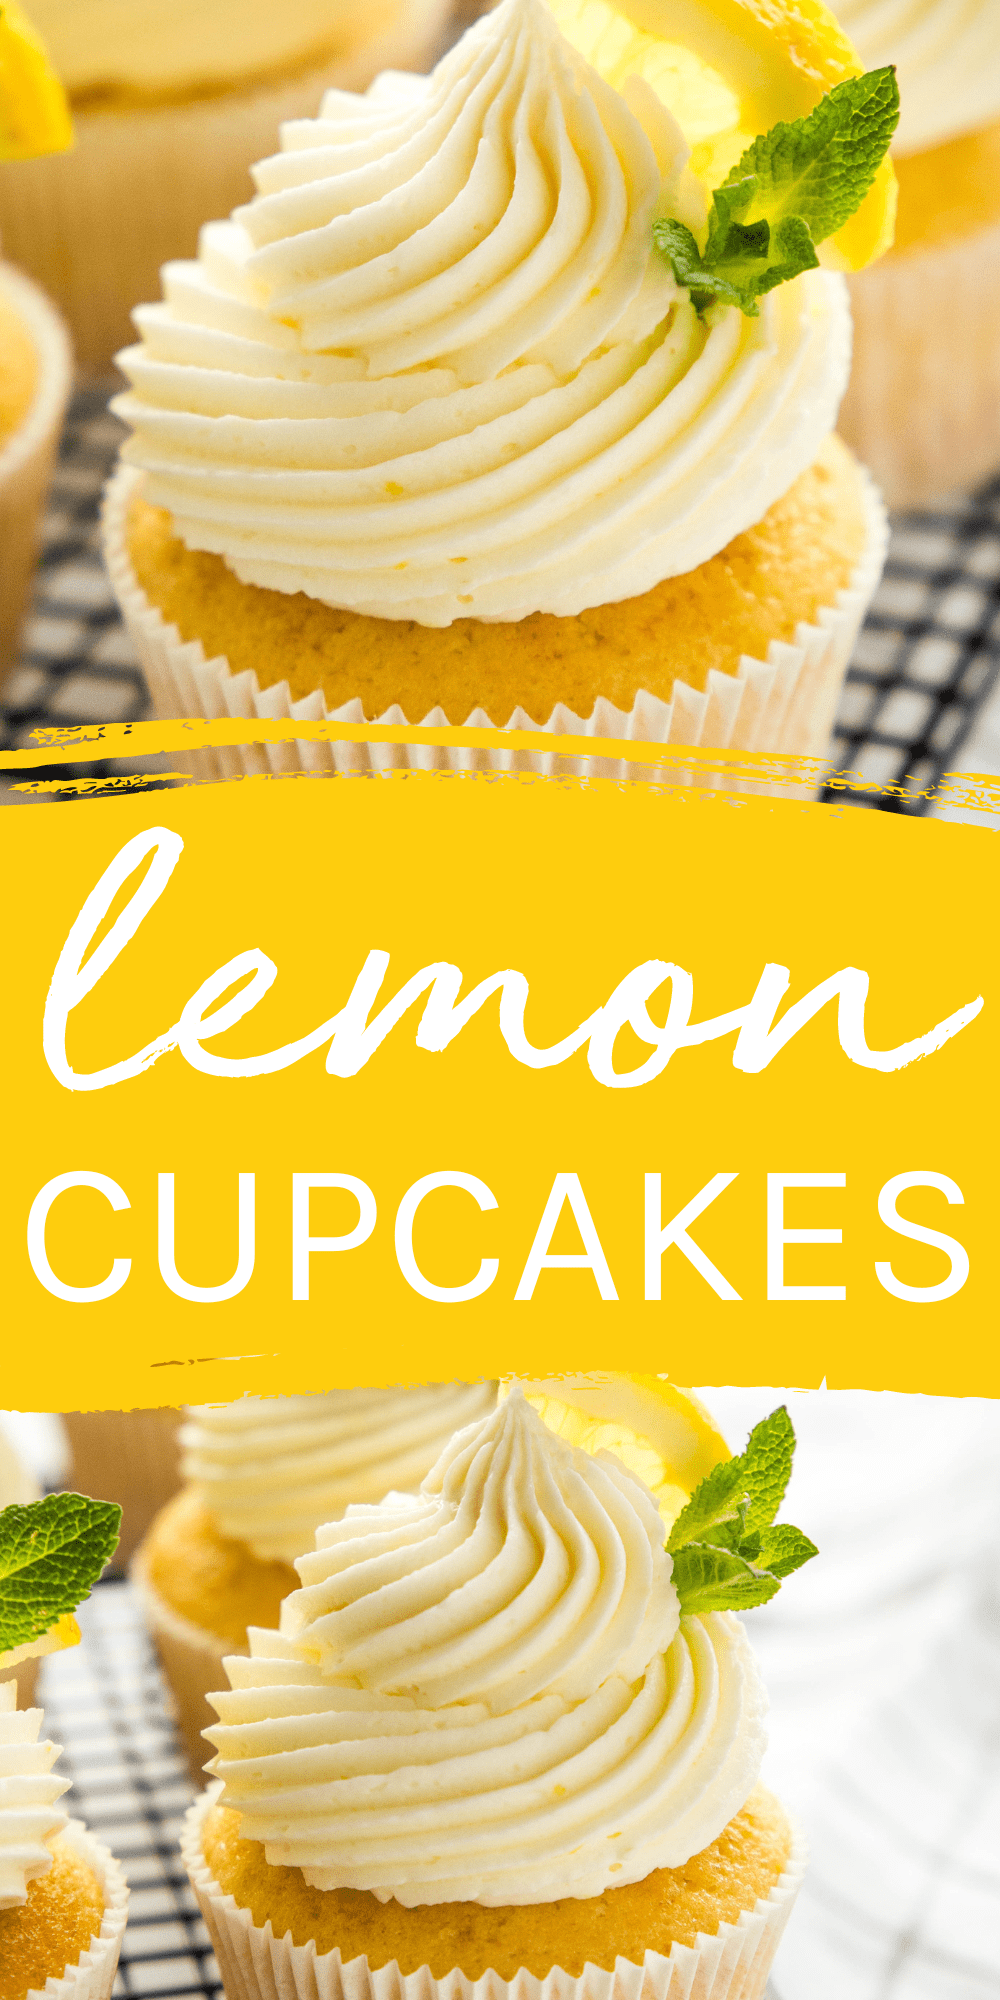 This Lemon Cupcakes Recipe is the perfect light and fresh summer dessert. A tender lemon cupcake with sweet & creamy lemon buttercream frosting. Recipe from thebusybaker.ca! #lemoncupcakes #lemoncupcakesrecipe #lemoncupcakerecipe #easylemoncake #easylemoncupcakes #lemondessert #lemon #easydessert #dessertrecipe via @busybakerblog